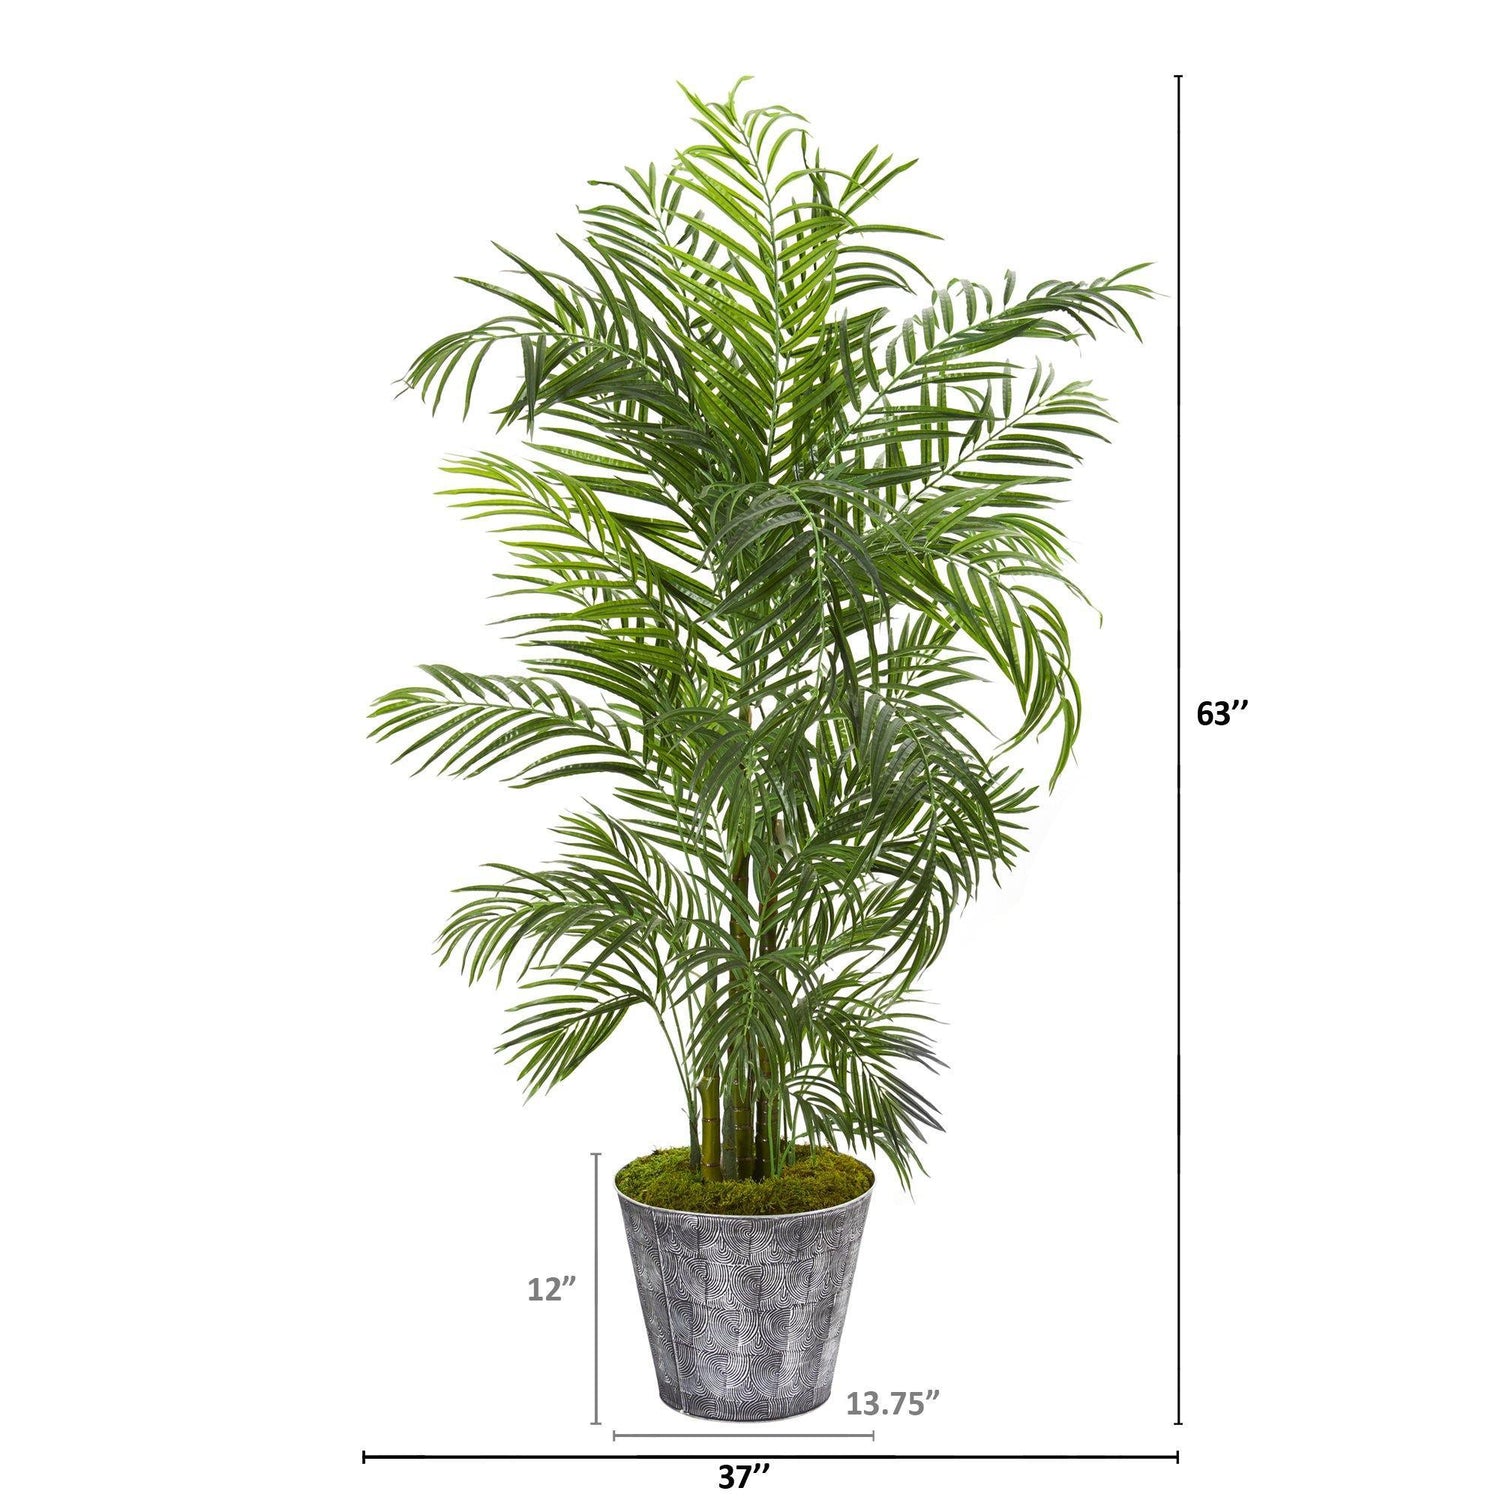 63” Areca Palm Artificial Tree in Decorative Planter (Indoor/Outdoor)